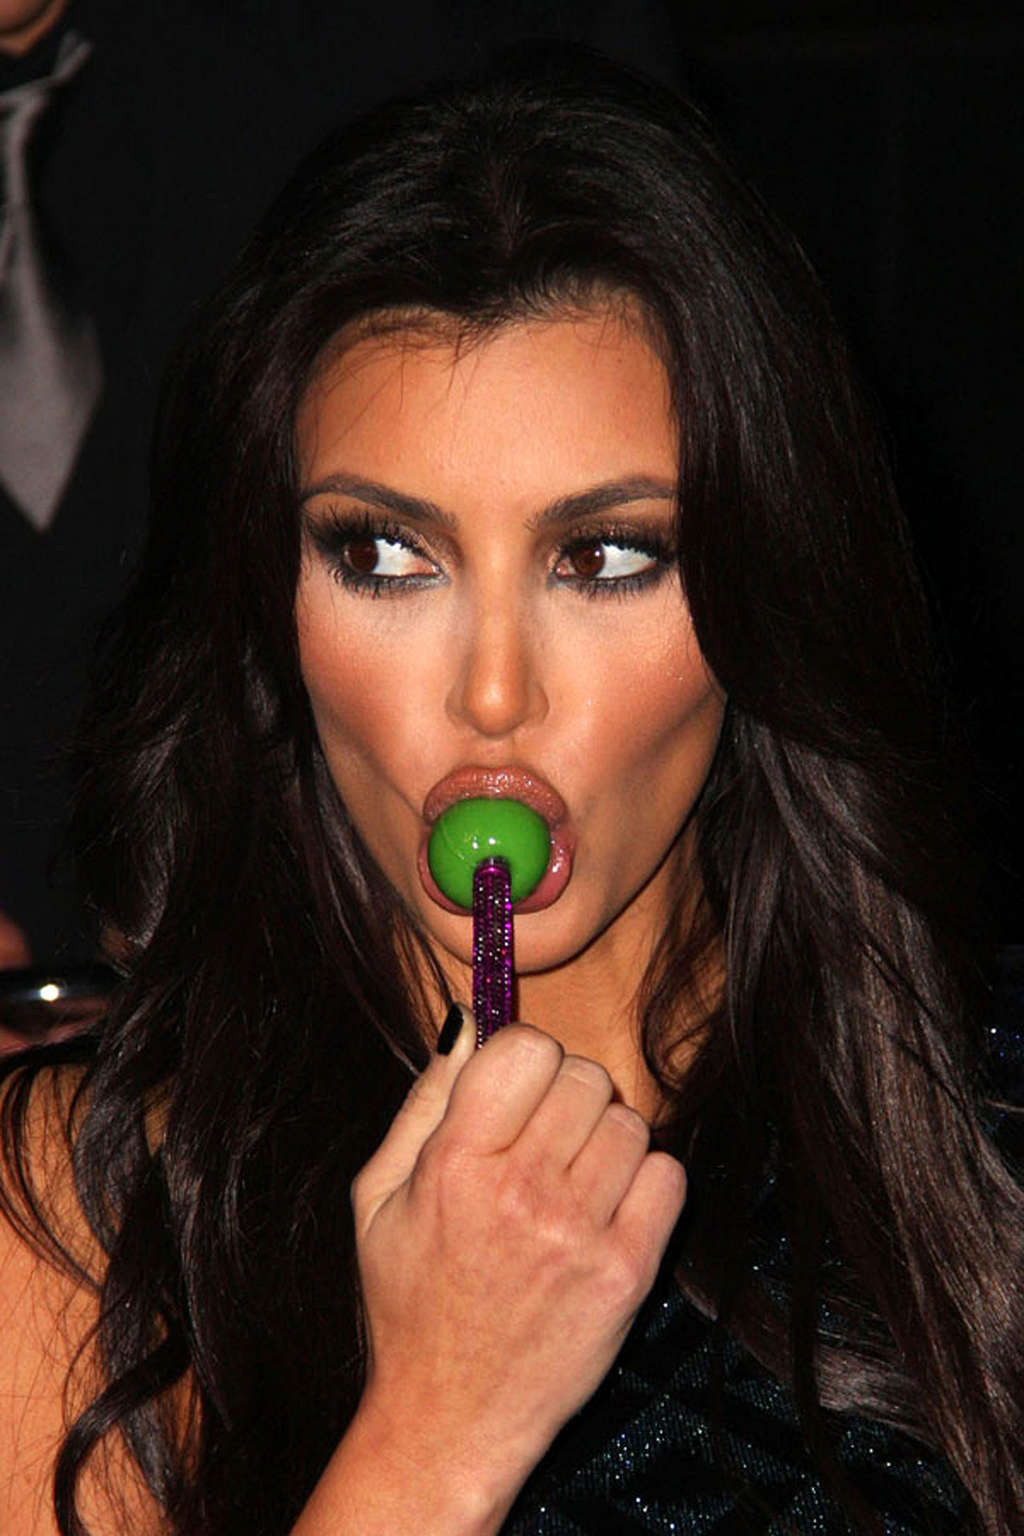 Kim Kardashian licking lollipop on a extremely sexy way hot photos #75362990